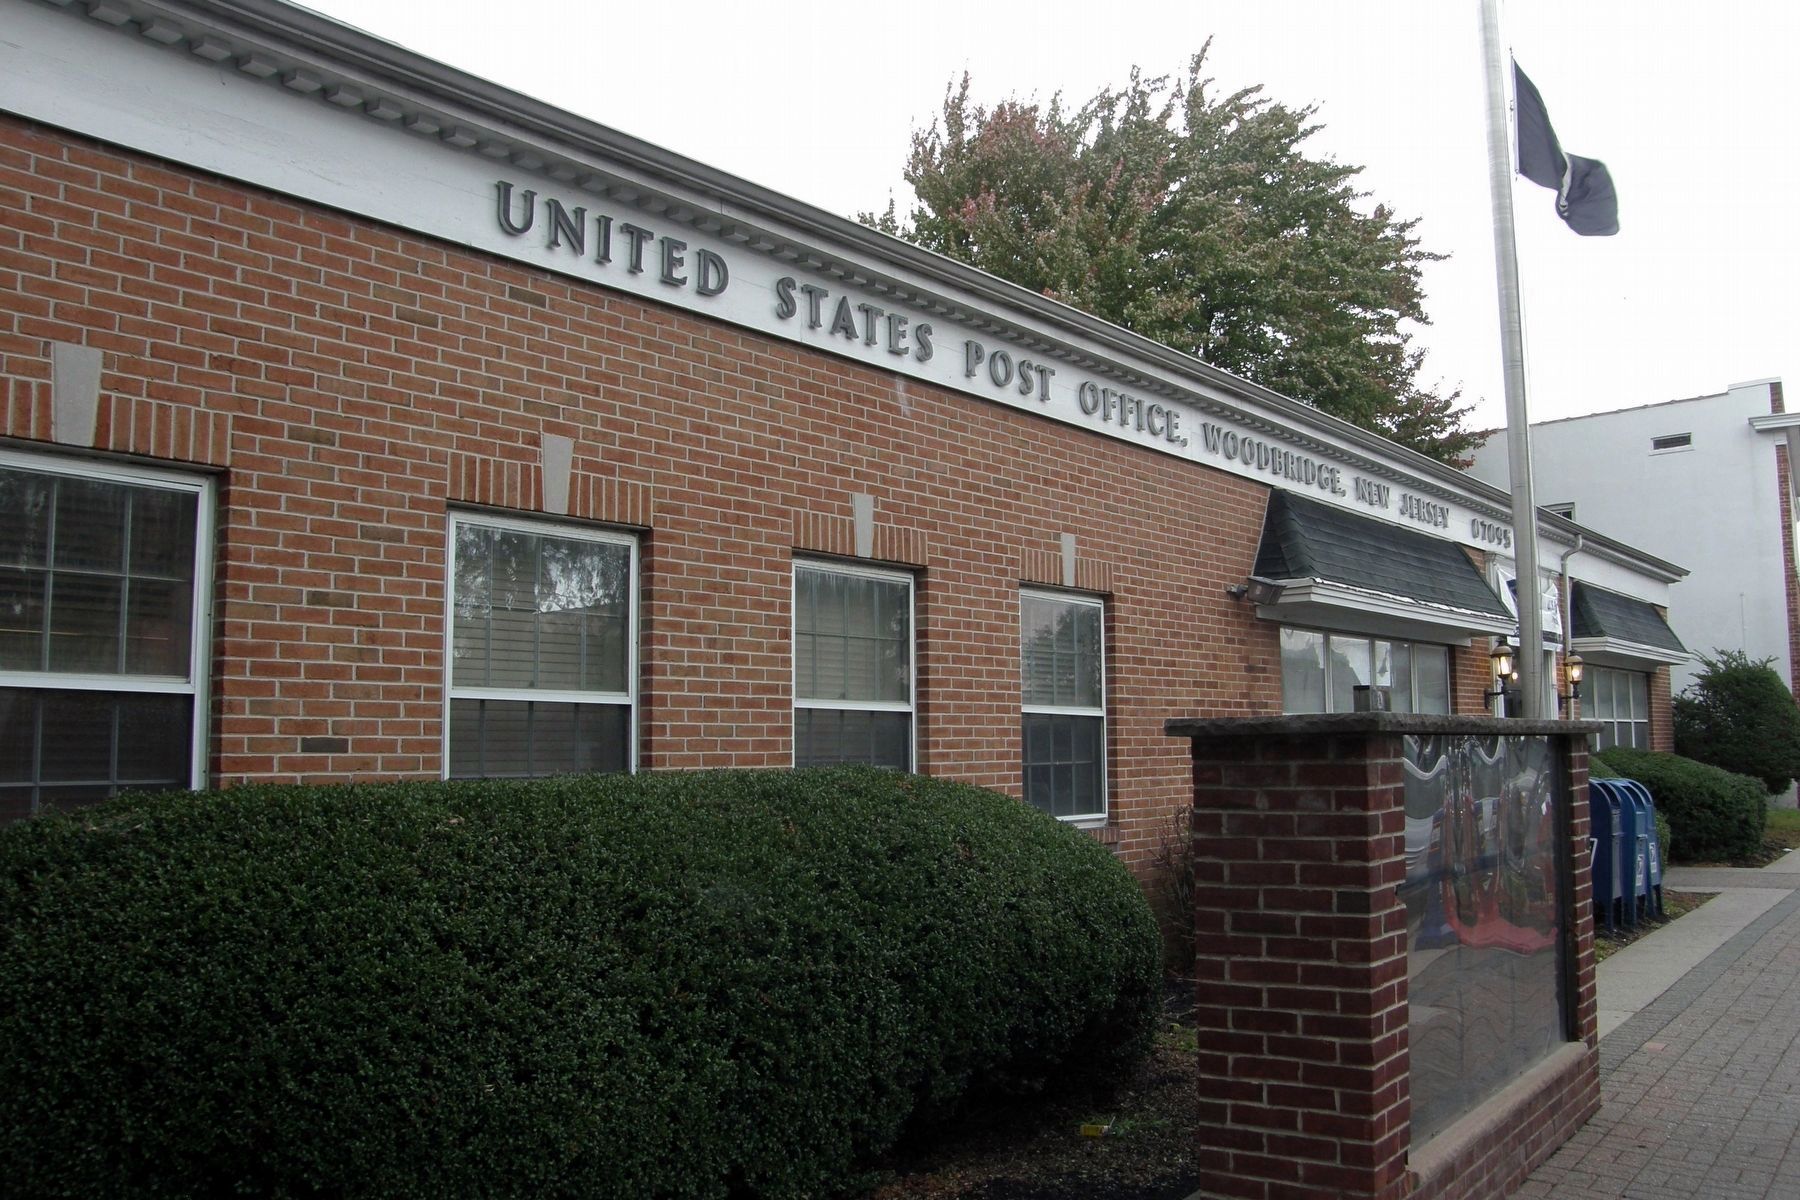 United States Post Office, Woodbridge NY, 07095 image. Click for full size.